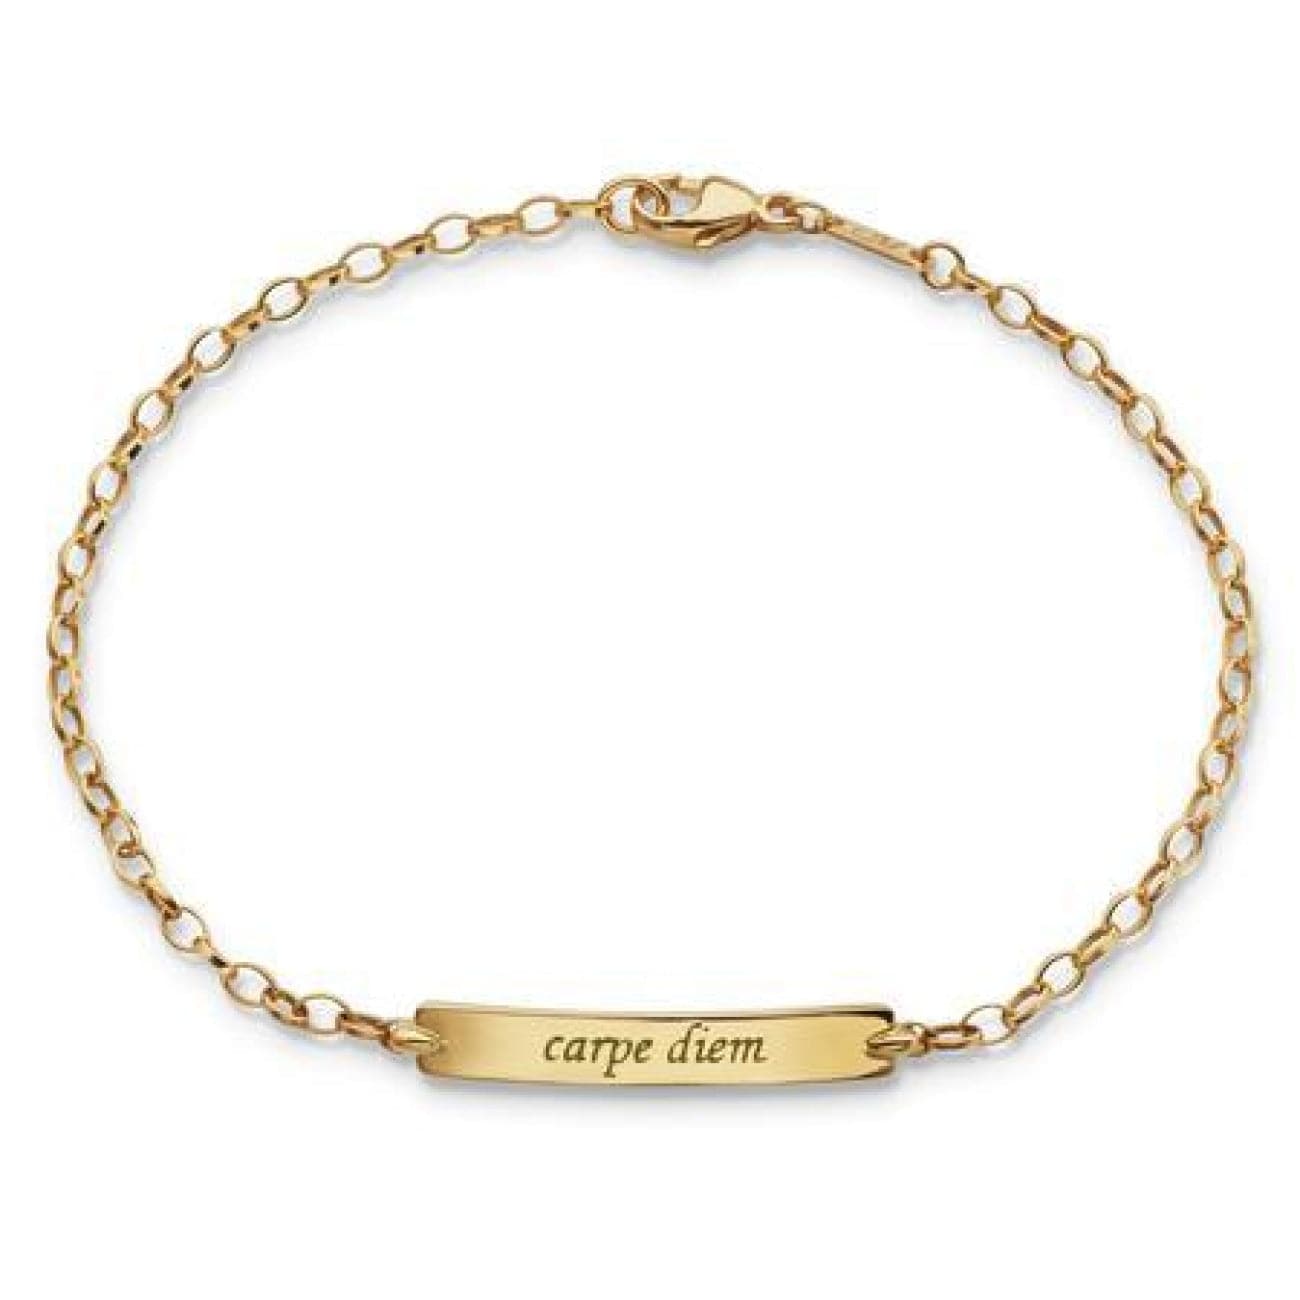 18K Yellow Gold ?Audrey? Link Slim Charm Bracelet - Charms & Bracelets by Monica Rich Kosann